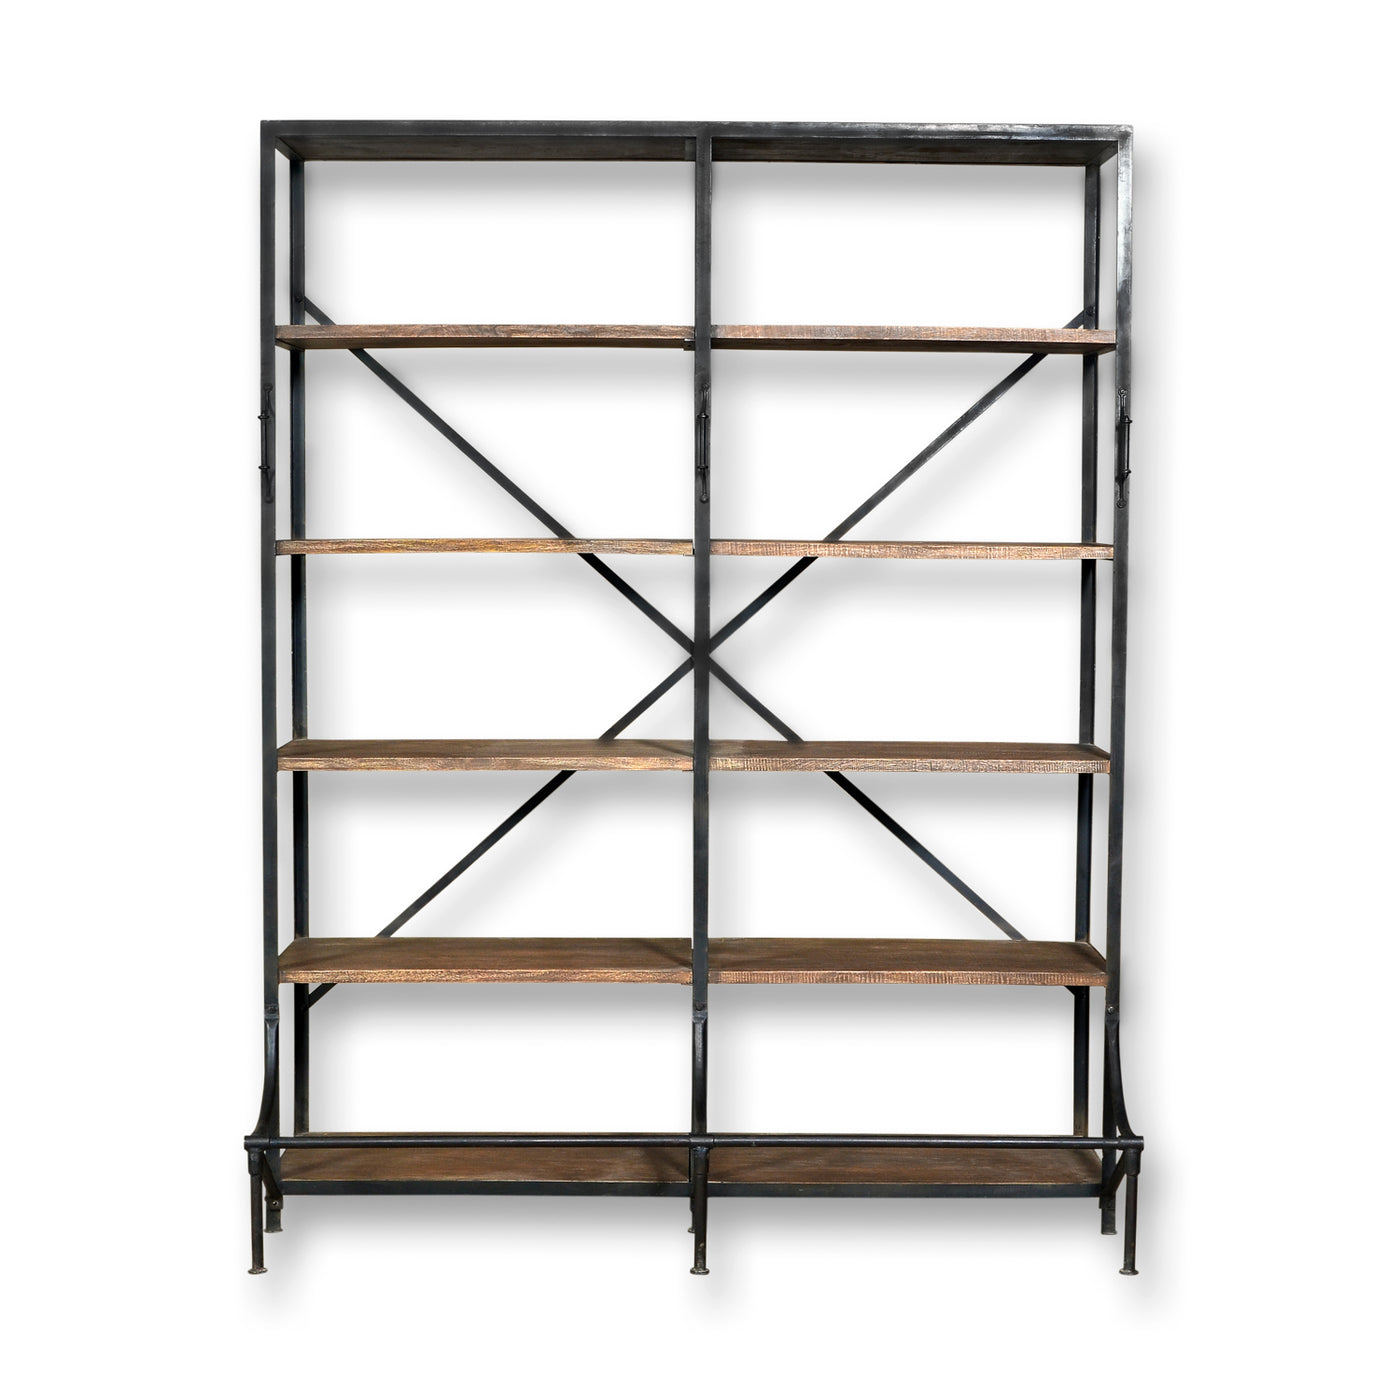 Industrial 10-Shelf Bookshelf Unit in Rustic Mango Finish